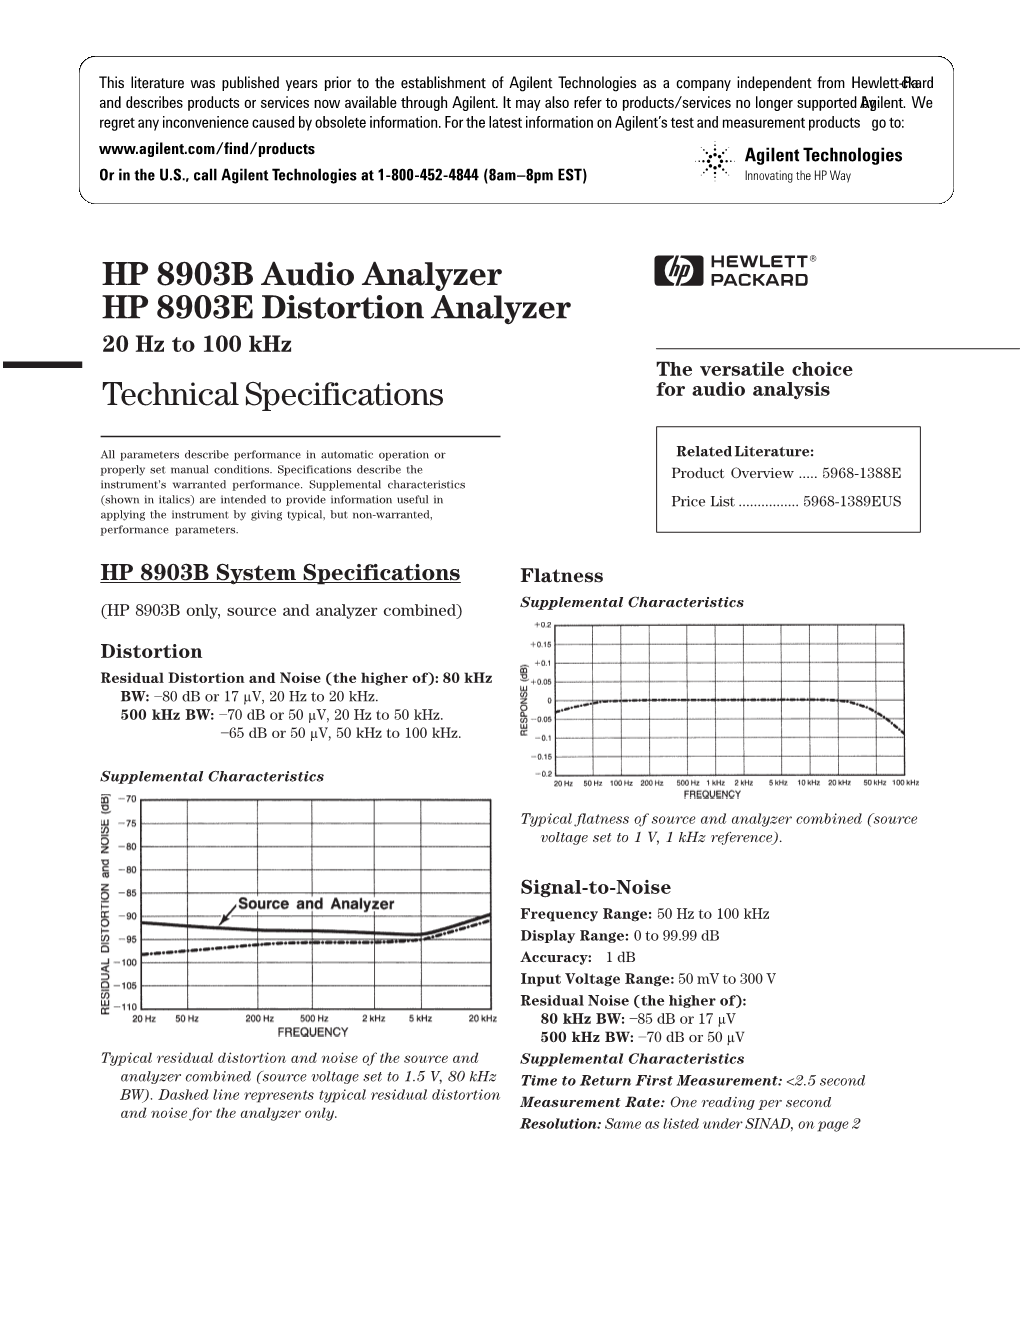 HP 8903B Audio Analyzer HP 8903E Distortion Analyzer Technical